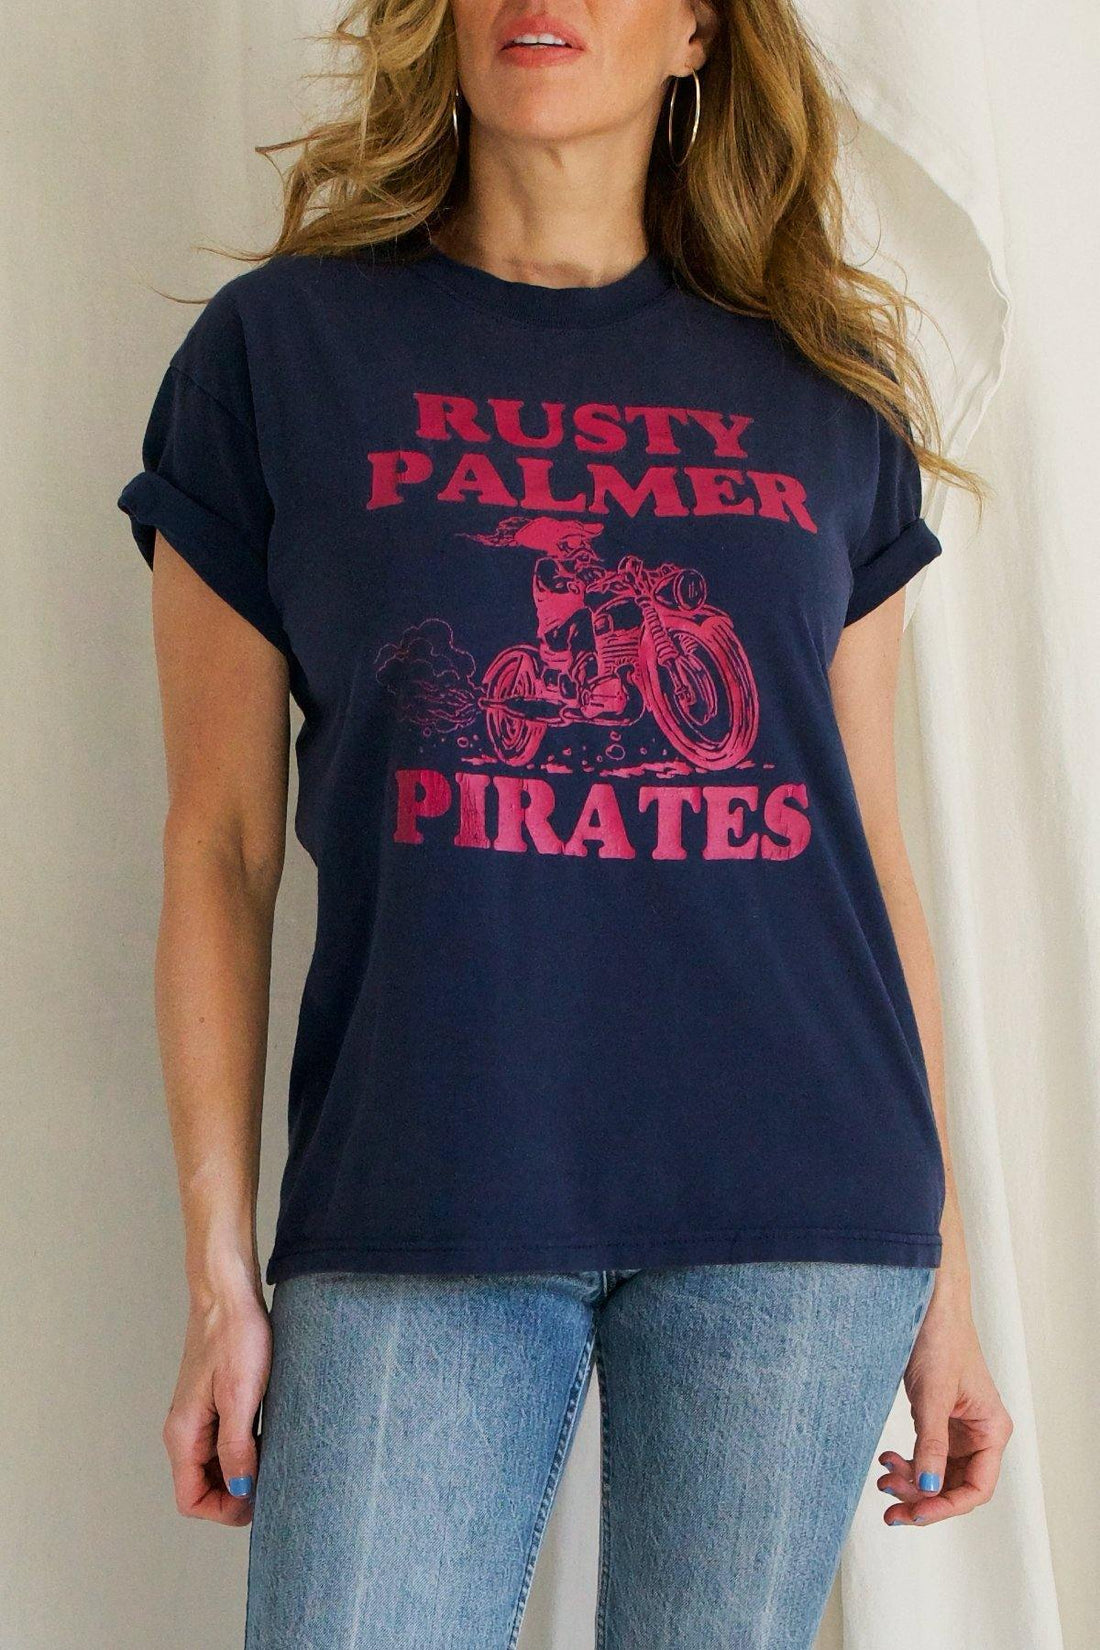 Vintage "Rusty Palmer Pirates" Tee-closiTherapi | vinTage